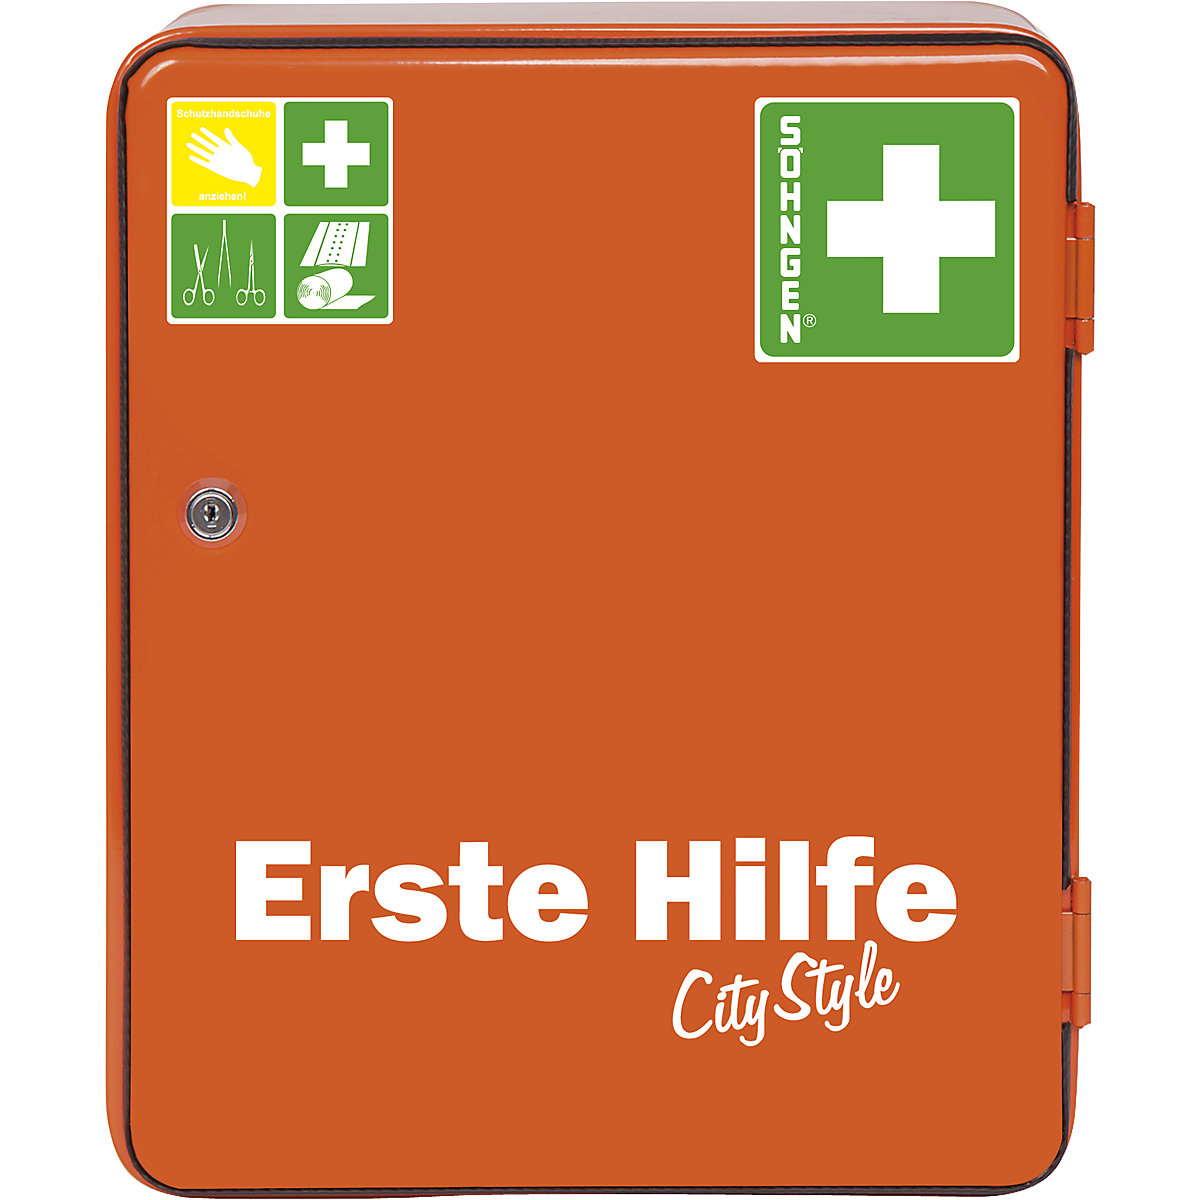 HEIDELBERG City Style first aid cabinet – SÖHNGEN